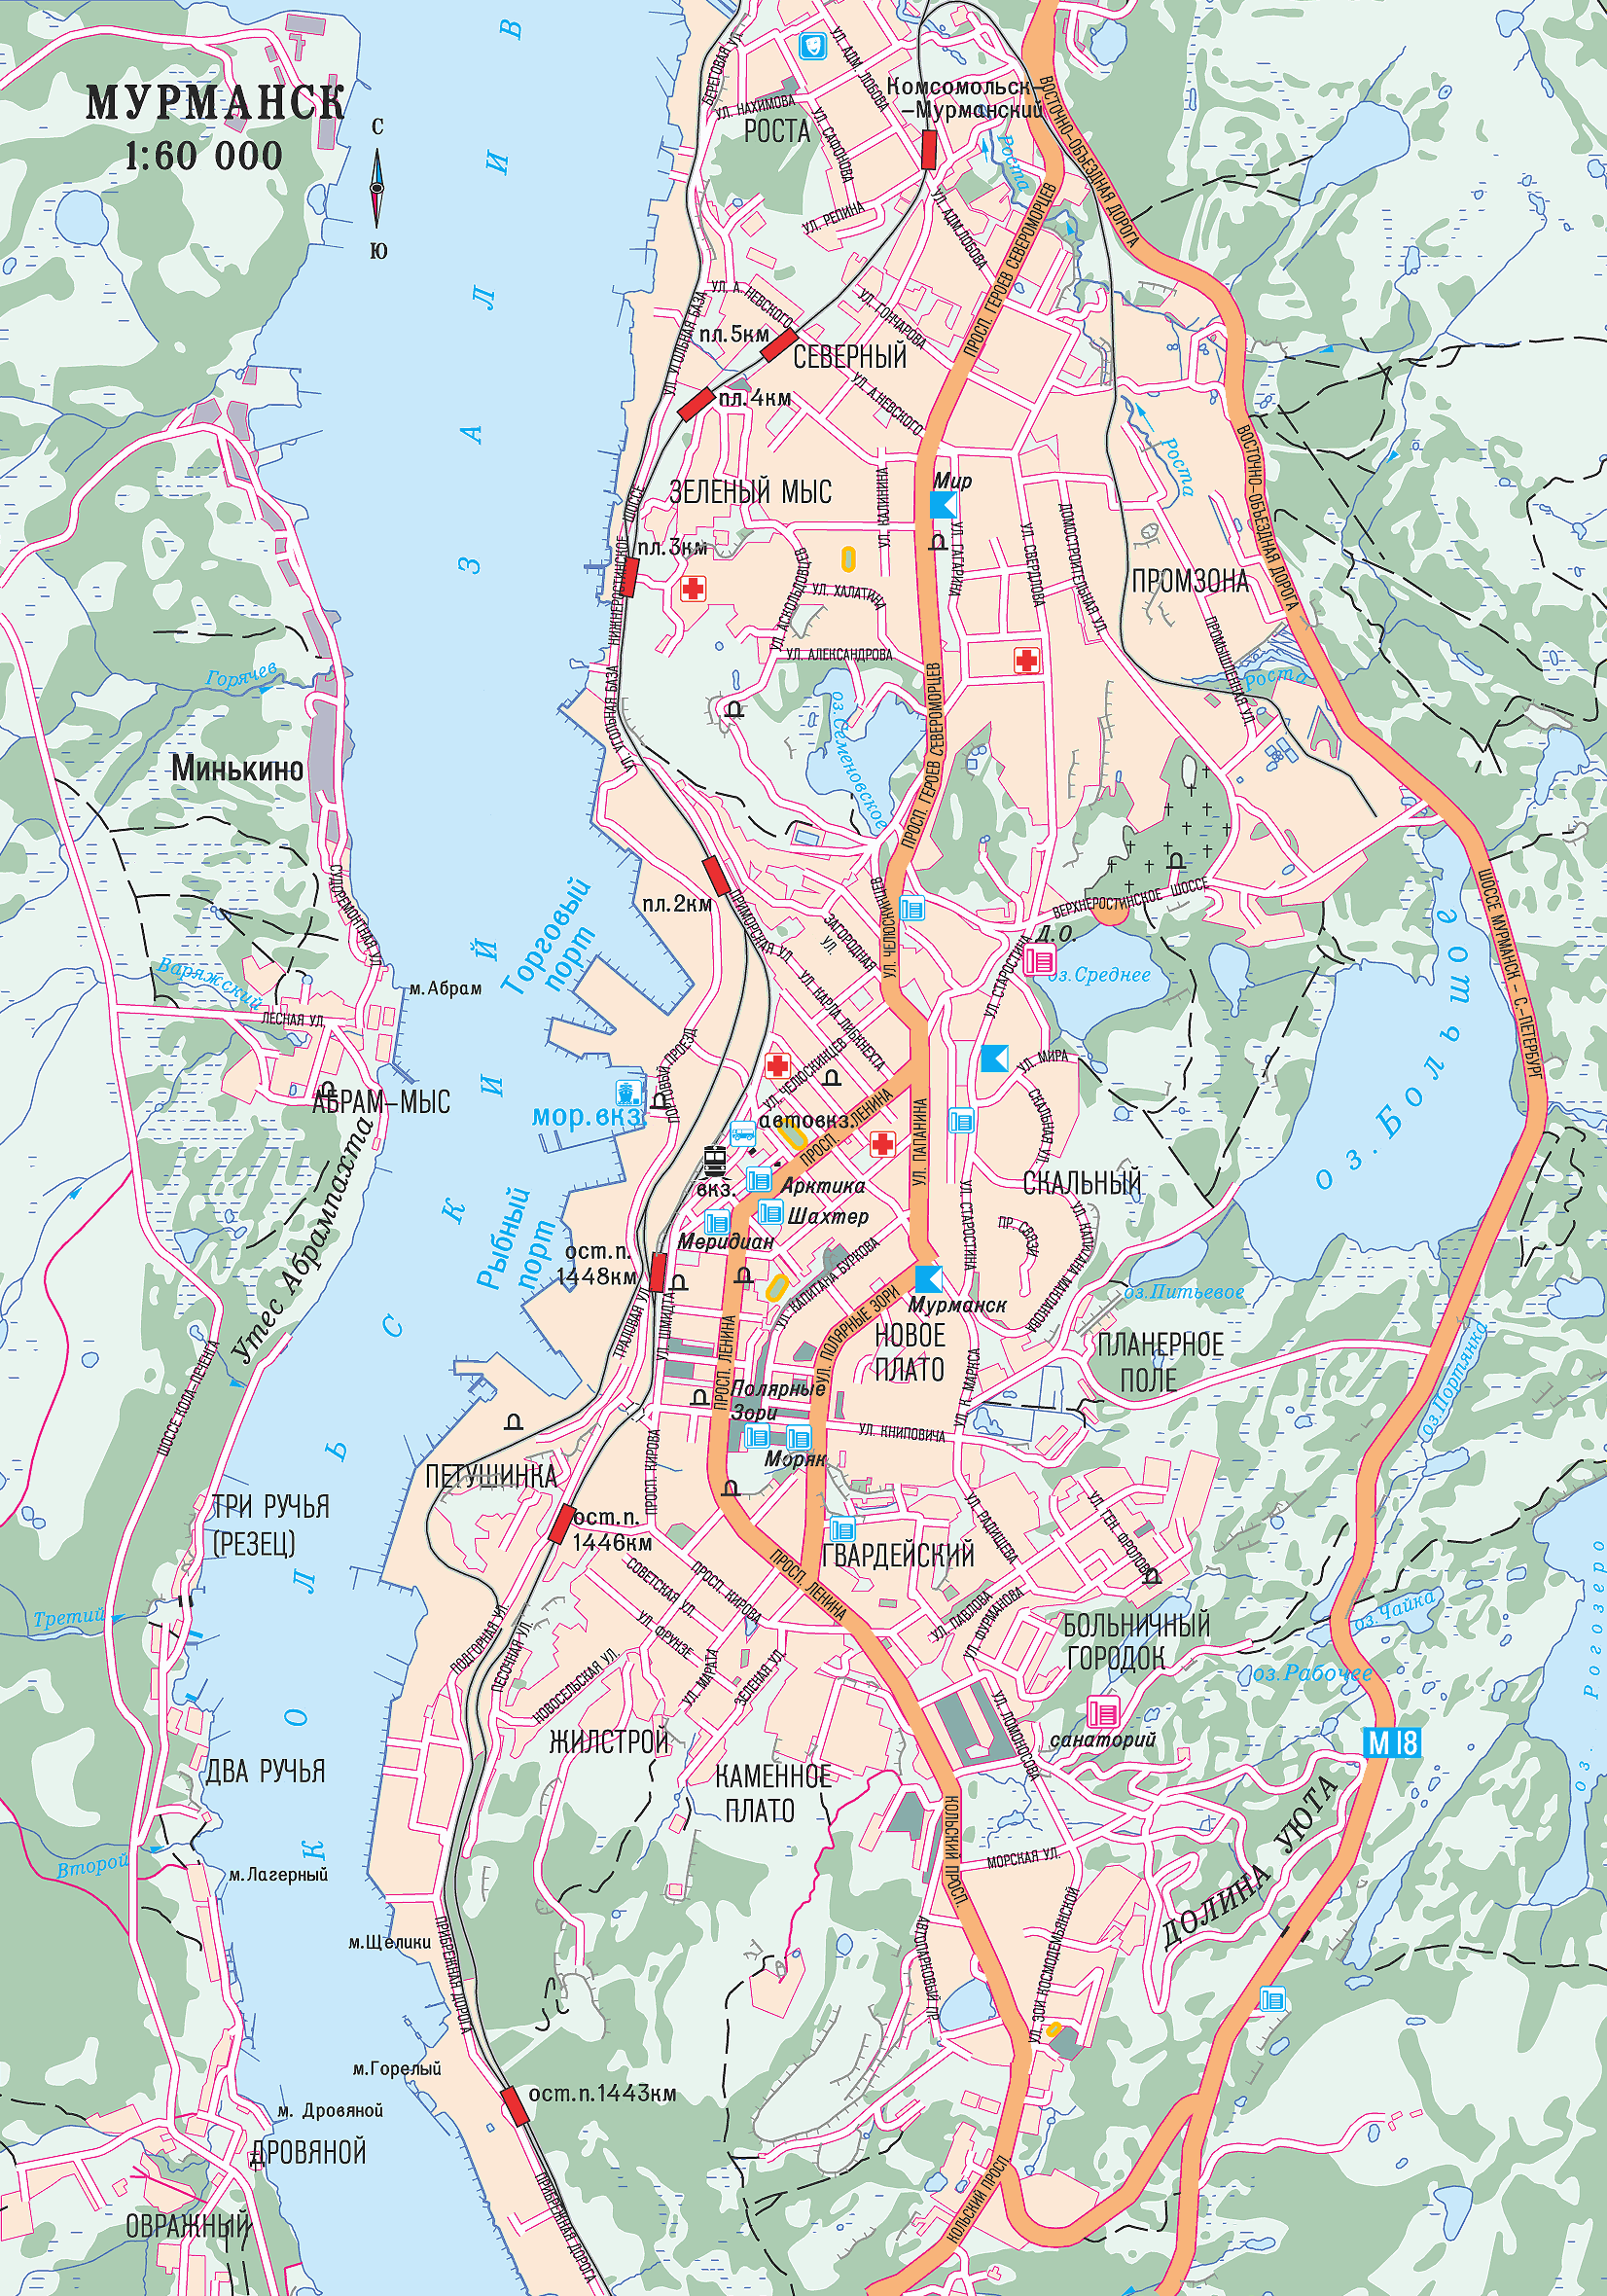 Map of Murmansk. City maps of Russia — Planetolog.com